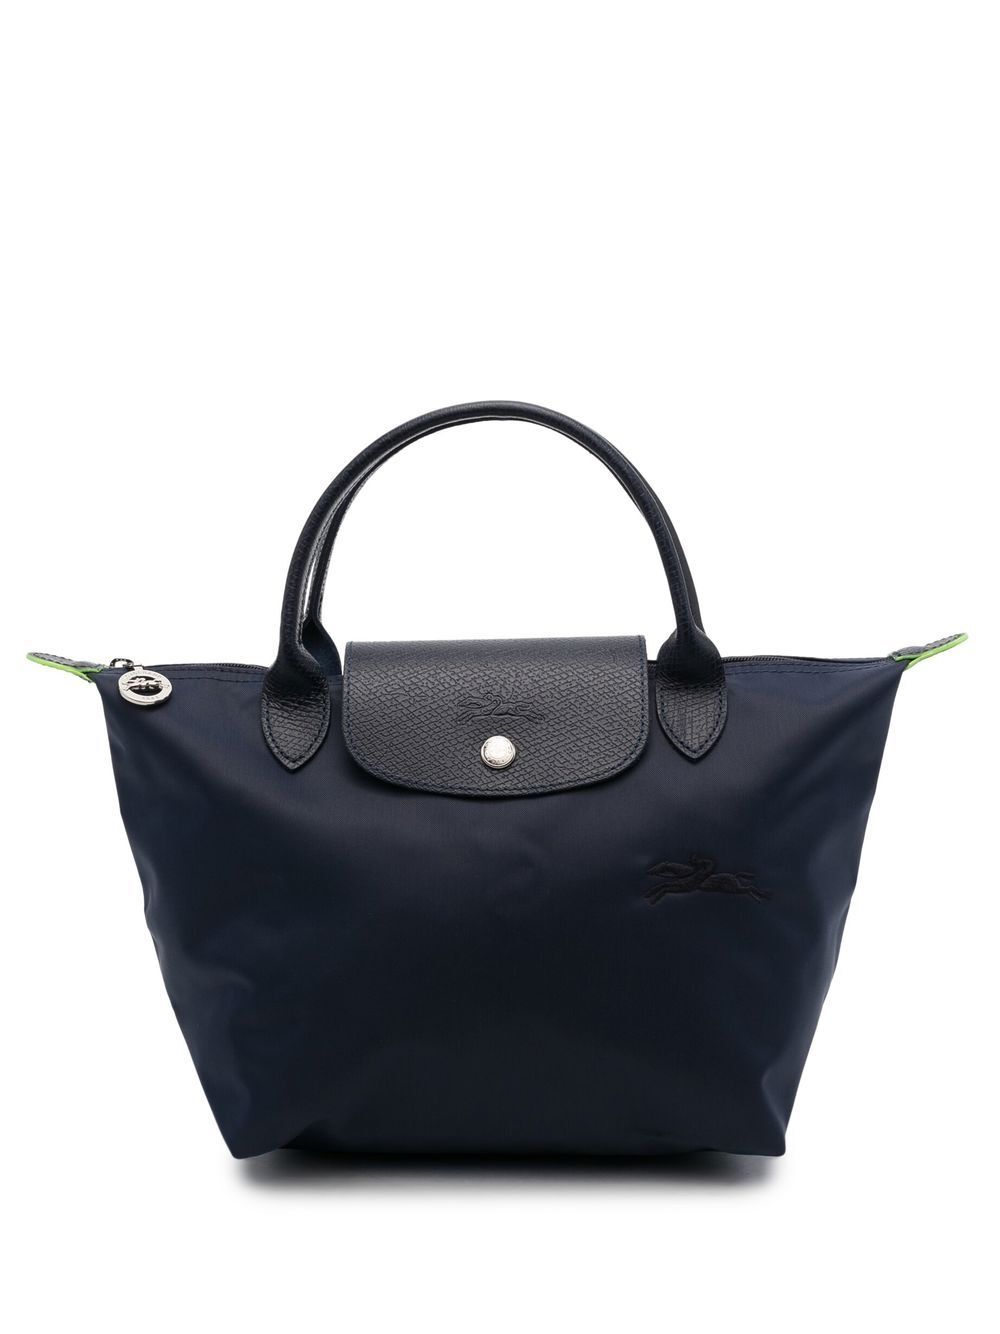 Longchamp small Le Pliage tote bag - Blue